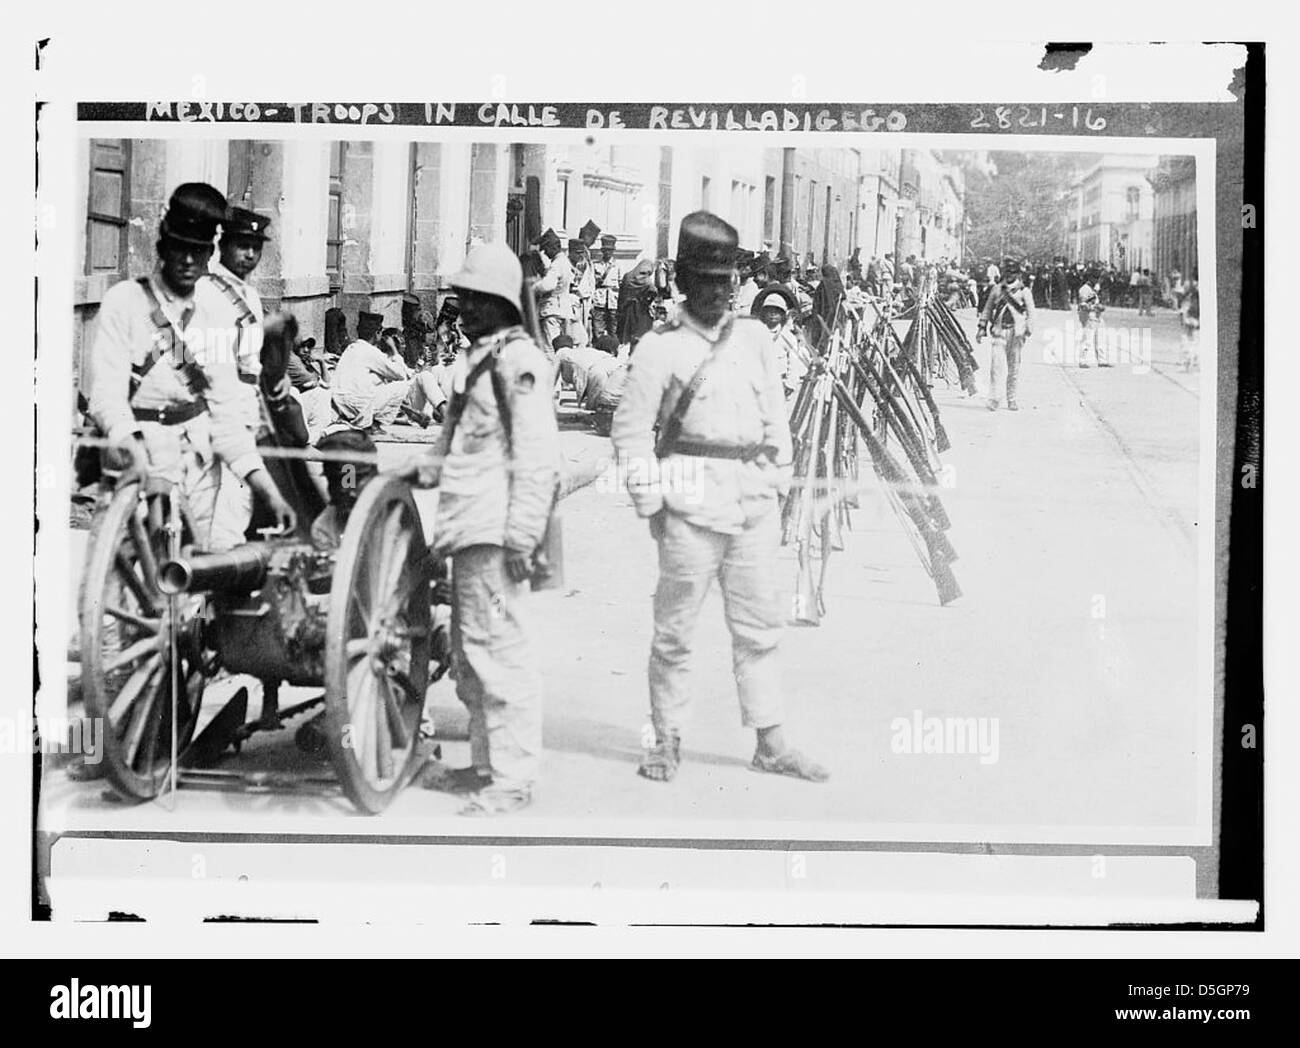 Mexico - troops in Calle de Revilladigego [i.e. Revillagigedo] (LOC) Stock Photo